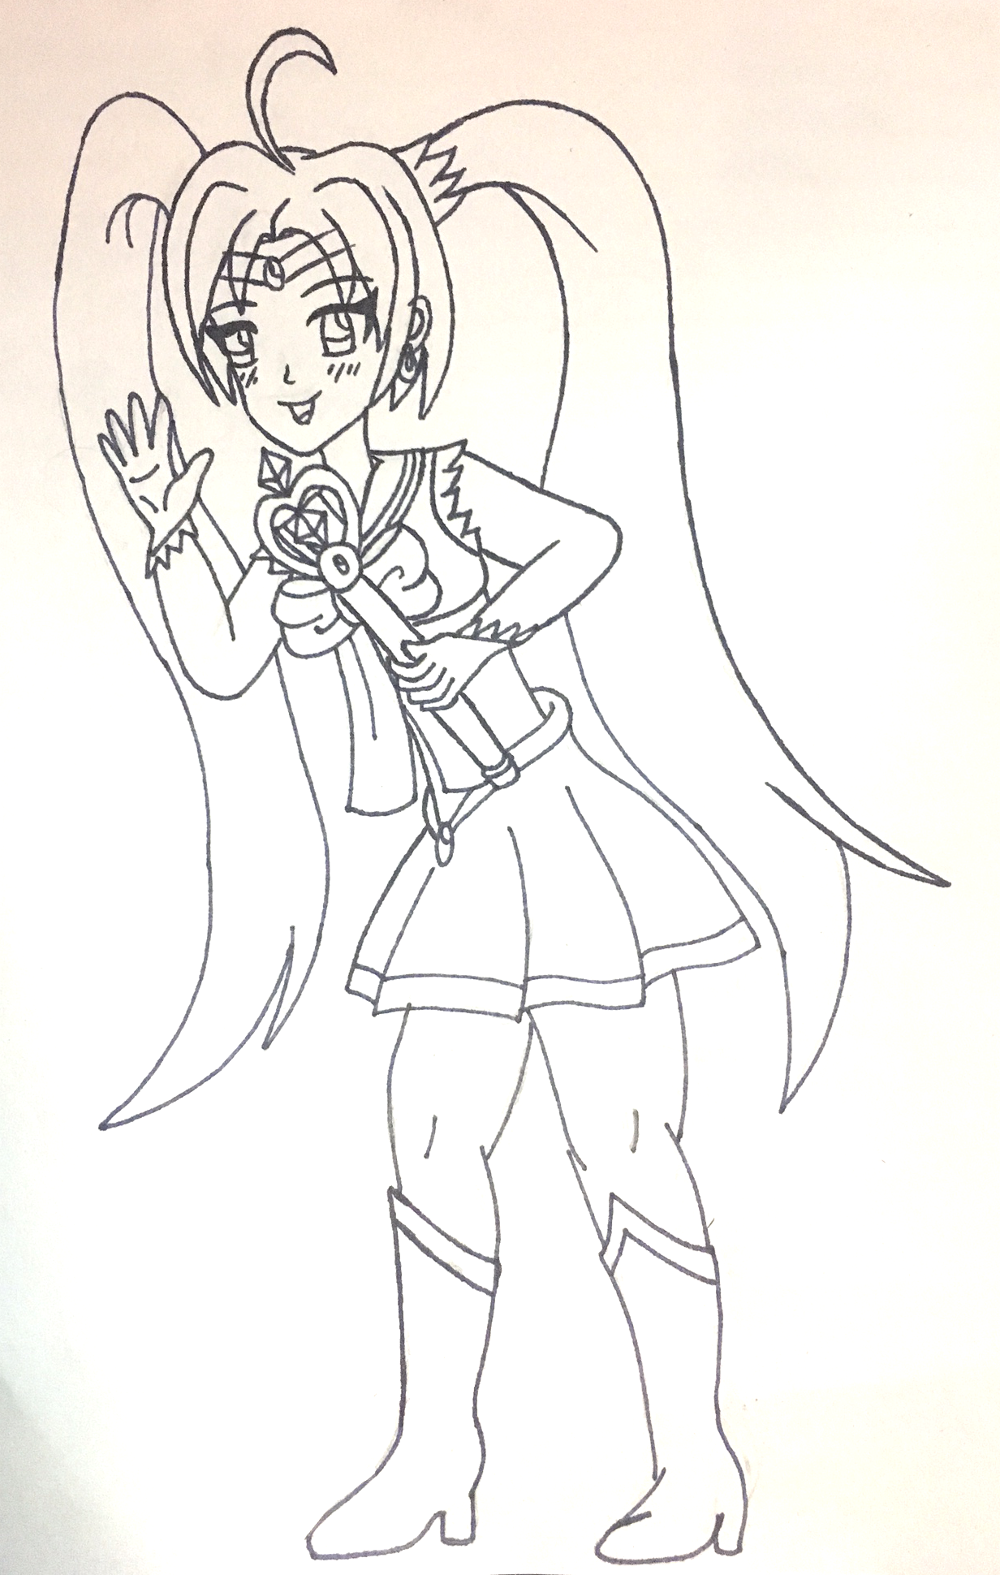 Sailor Miku sketch by AzureMikari